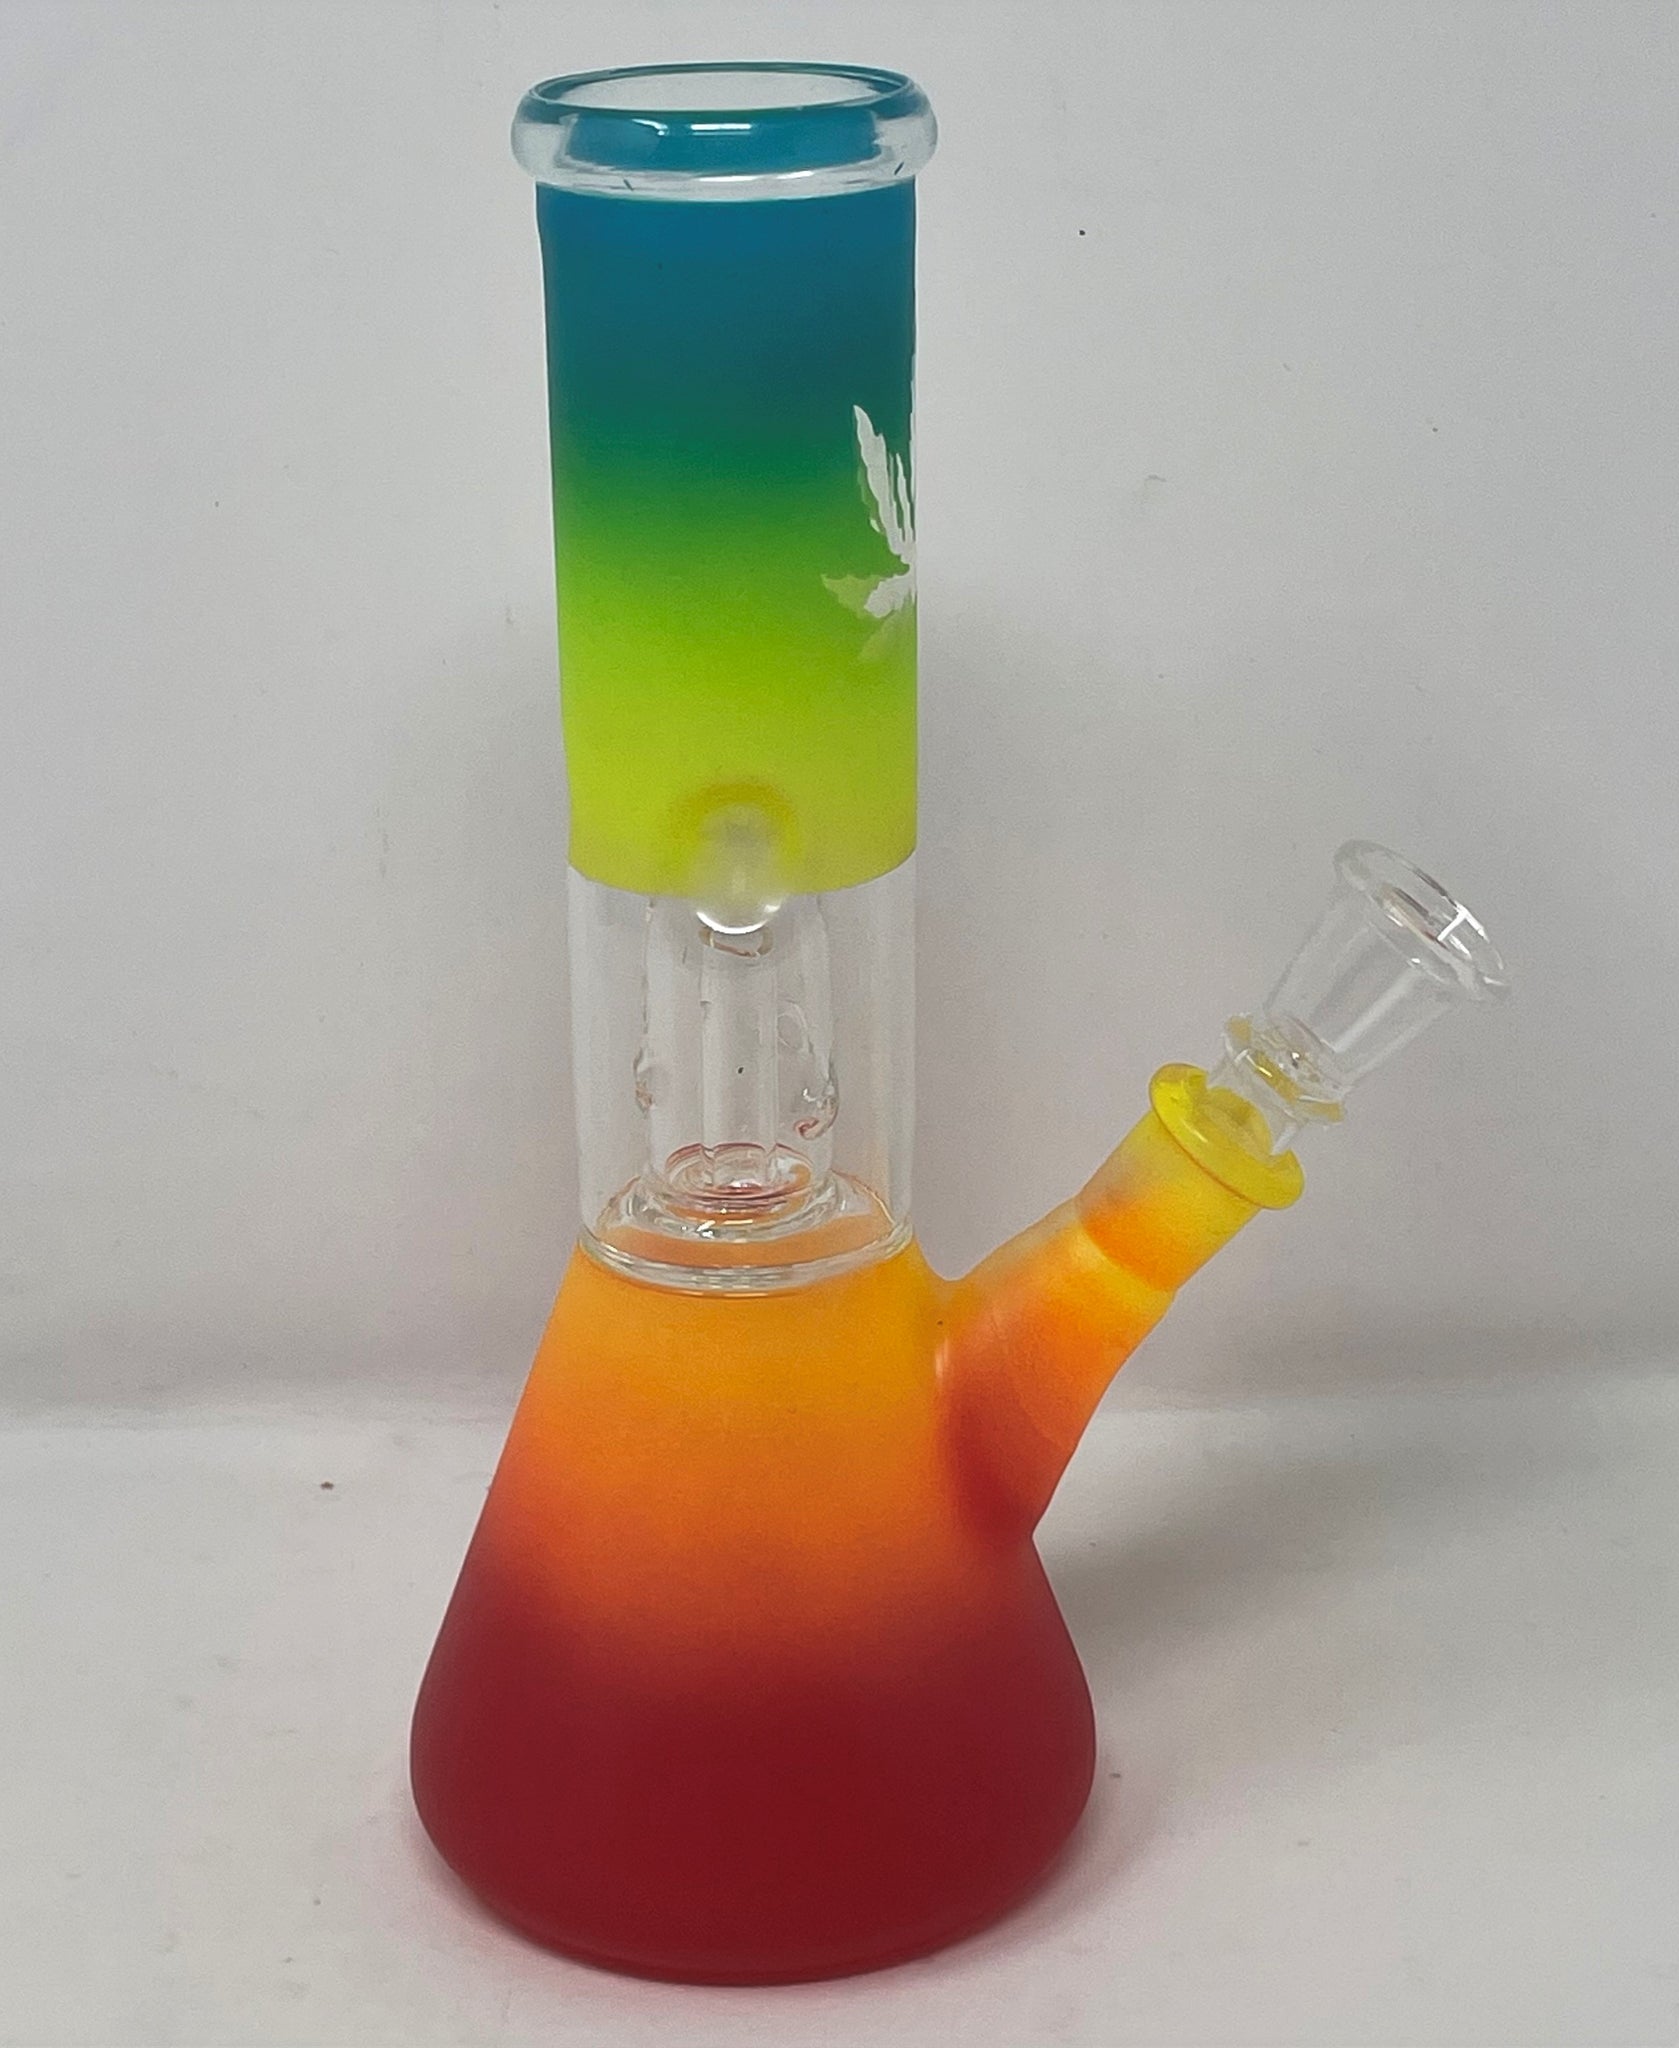 Colorful 8 Glass Beaker Bong featuring Marijuana Leaf Design & Downst